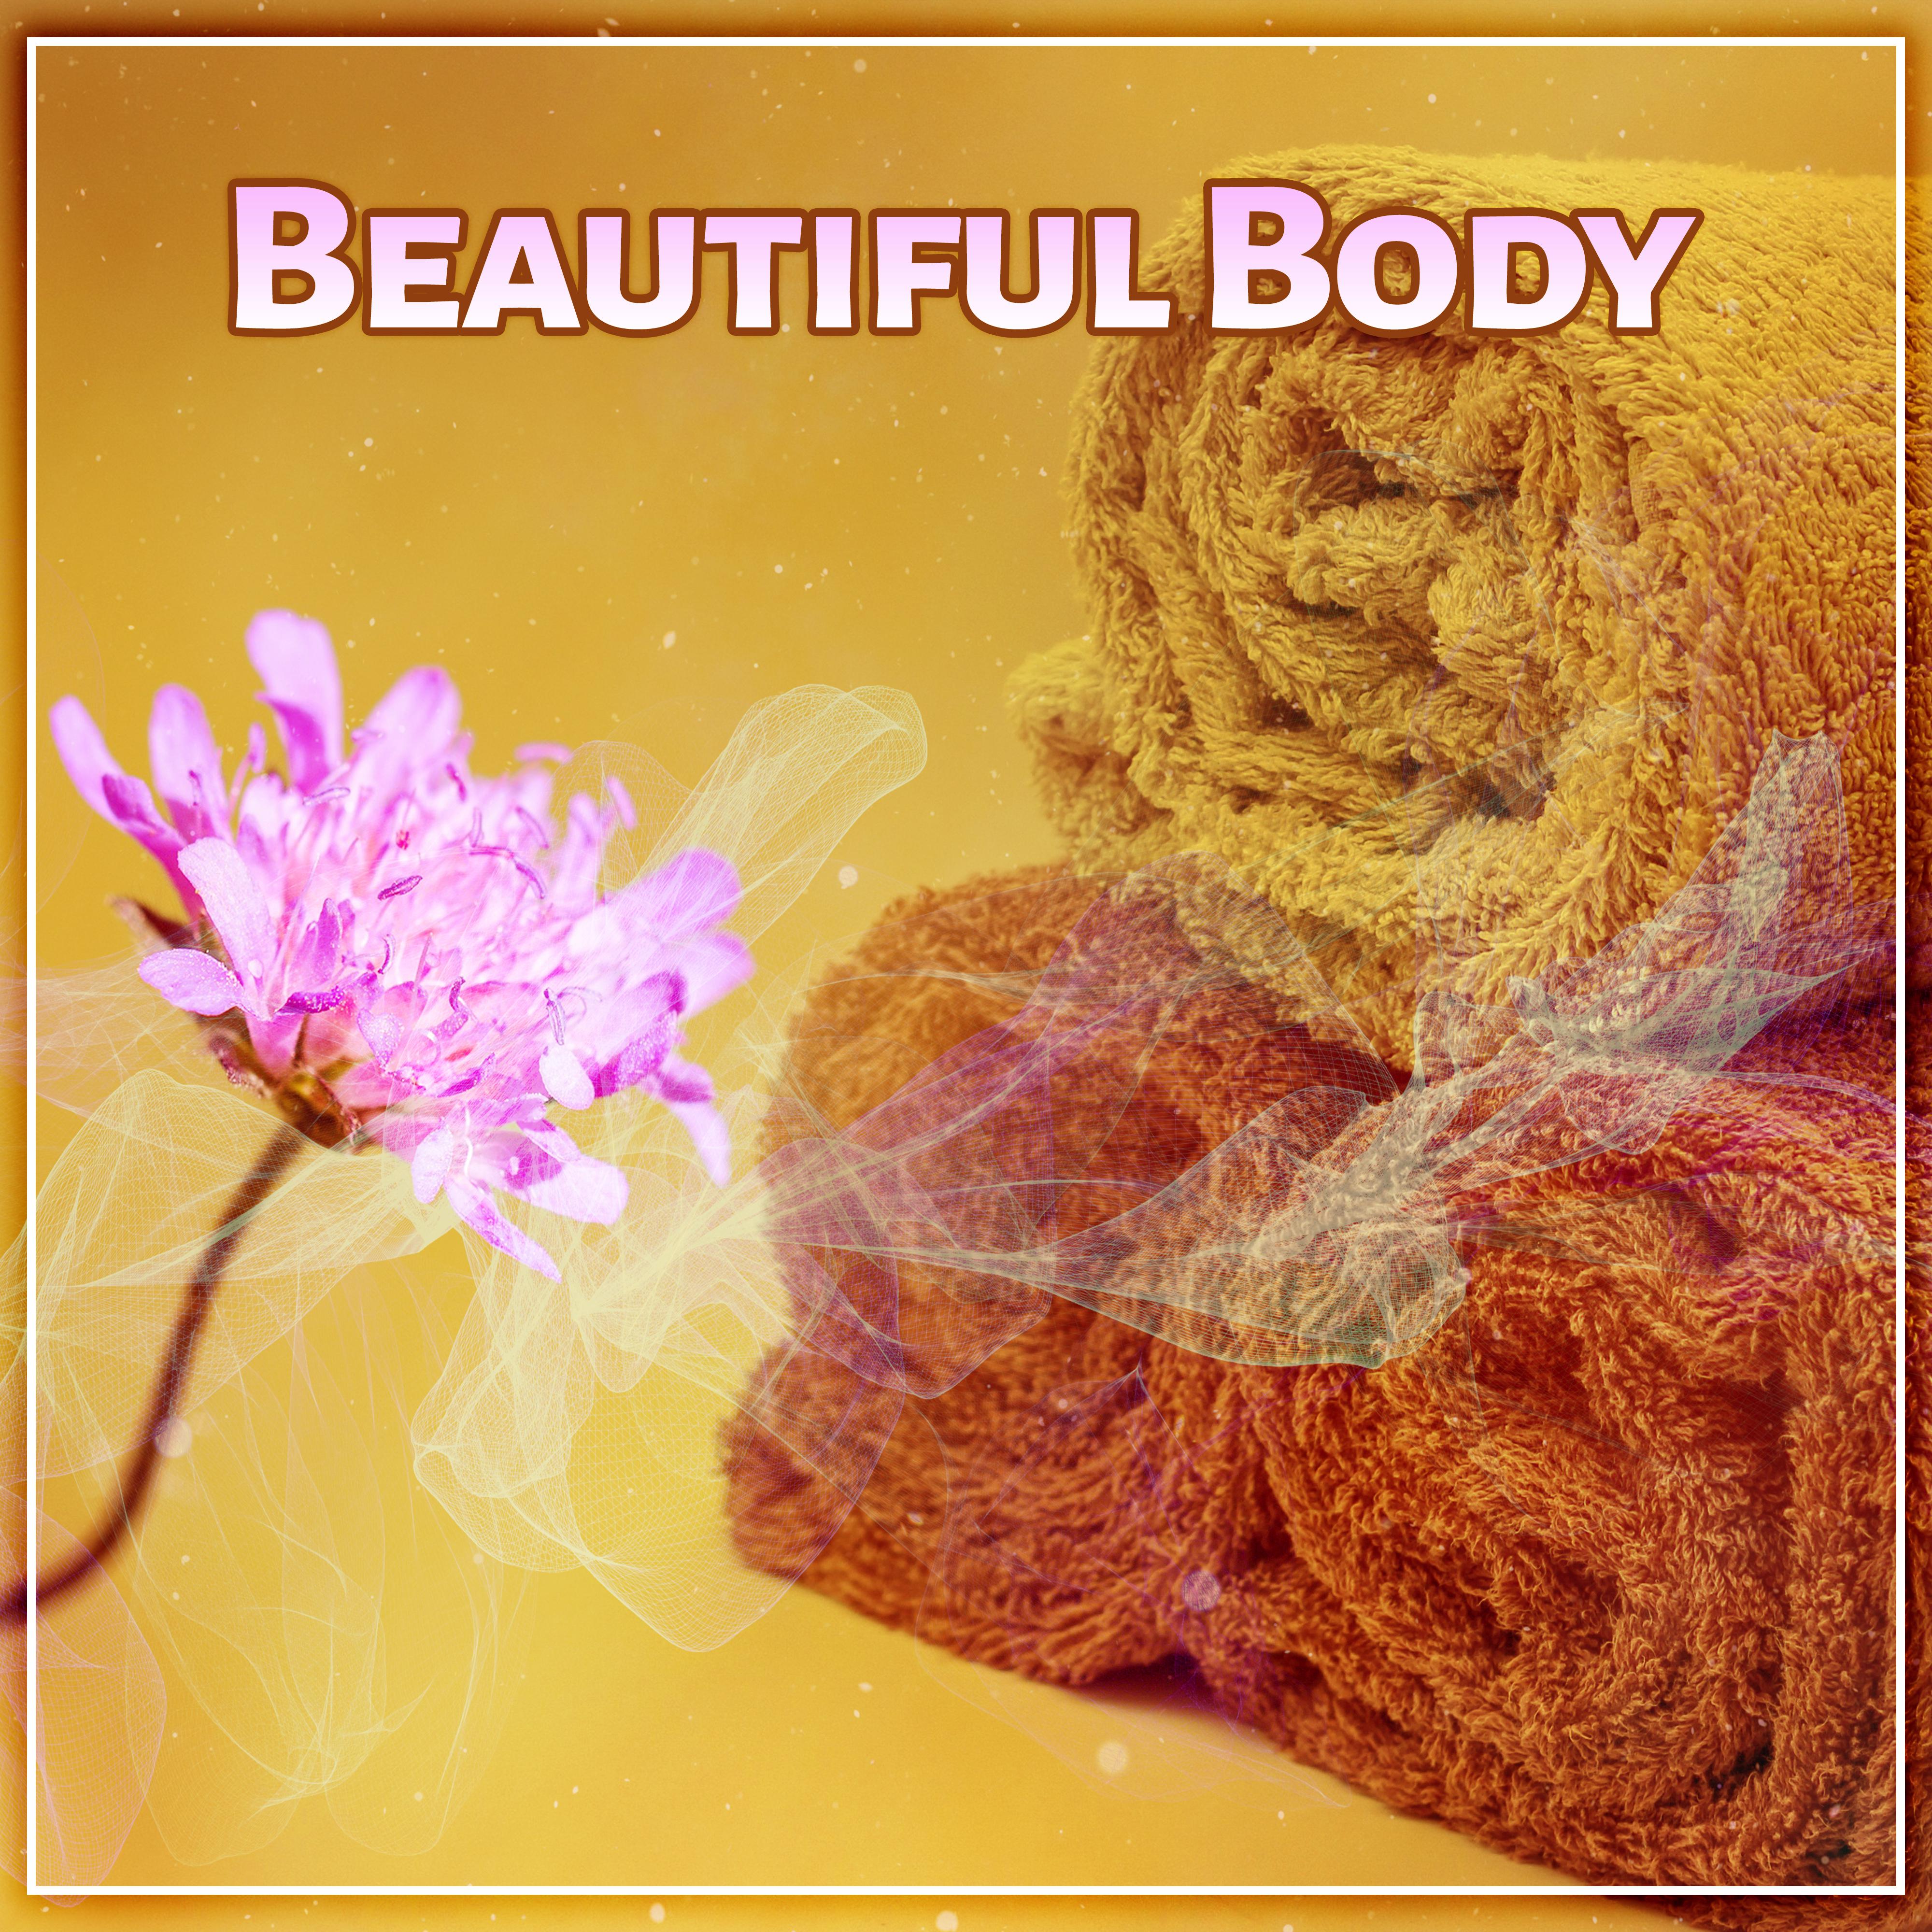 Beautiful Body – Calming Sounds for Spa, Healing Wellness, Nature Sounds, Peaceful Soul, Pure Massage